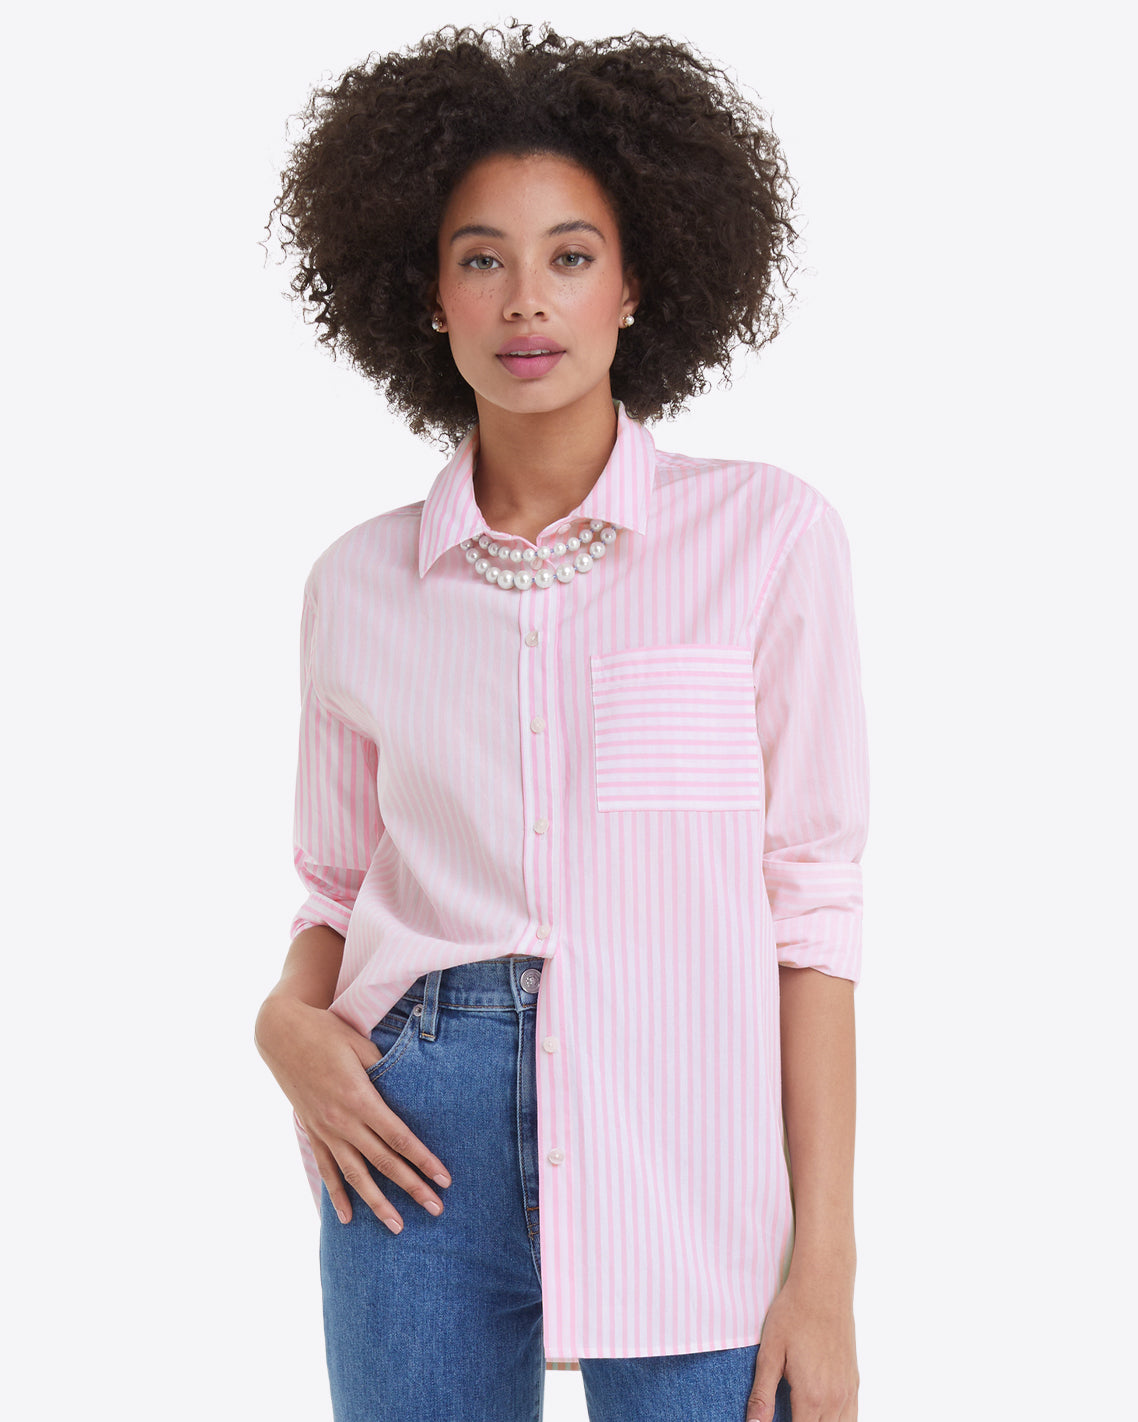 Lynn Long Sleeve Top in Pink Mixed Stripe